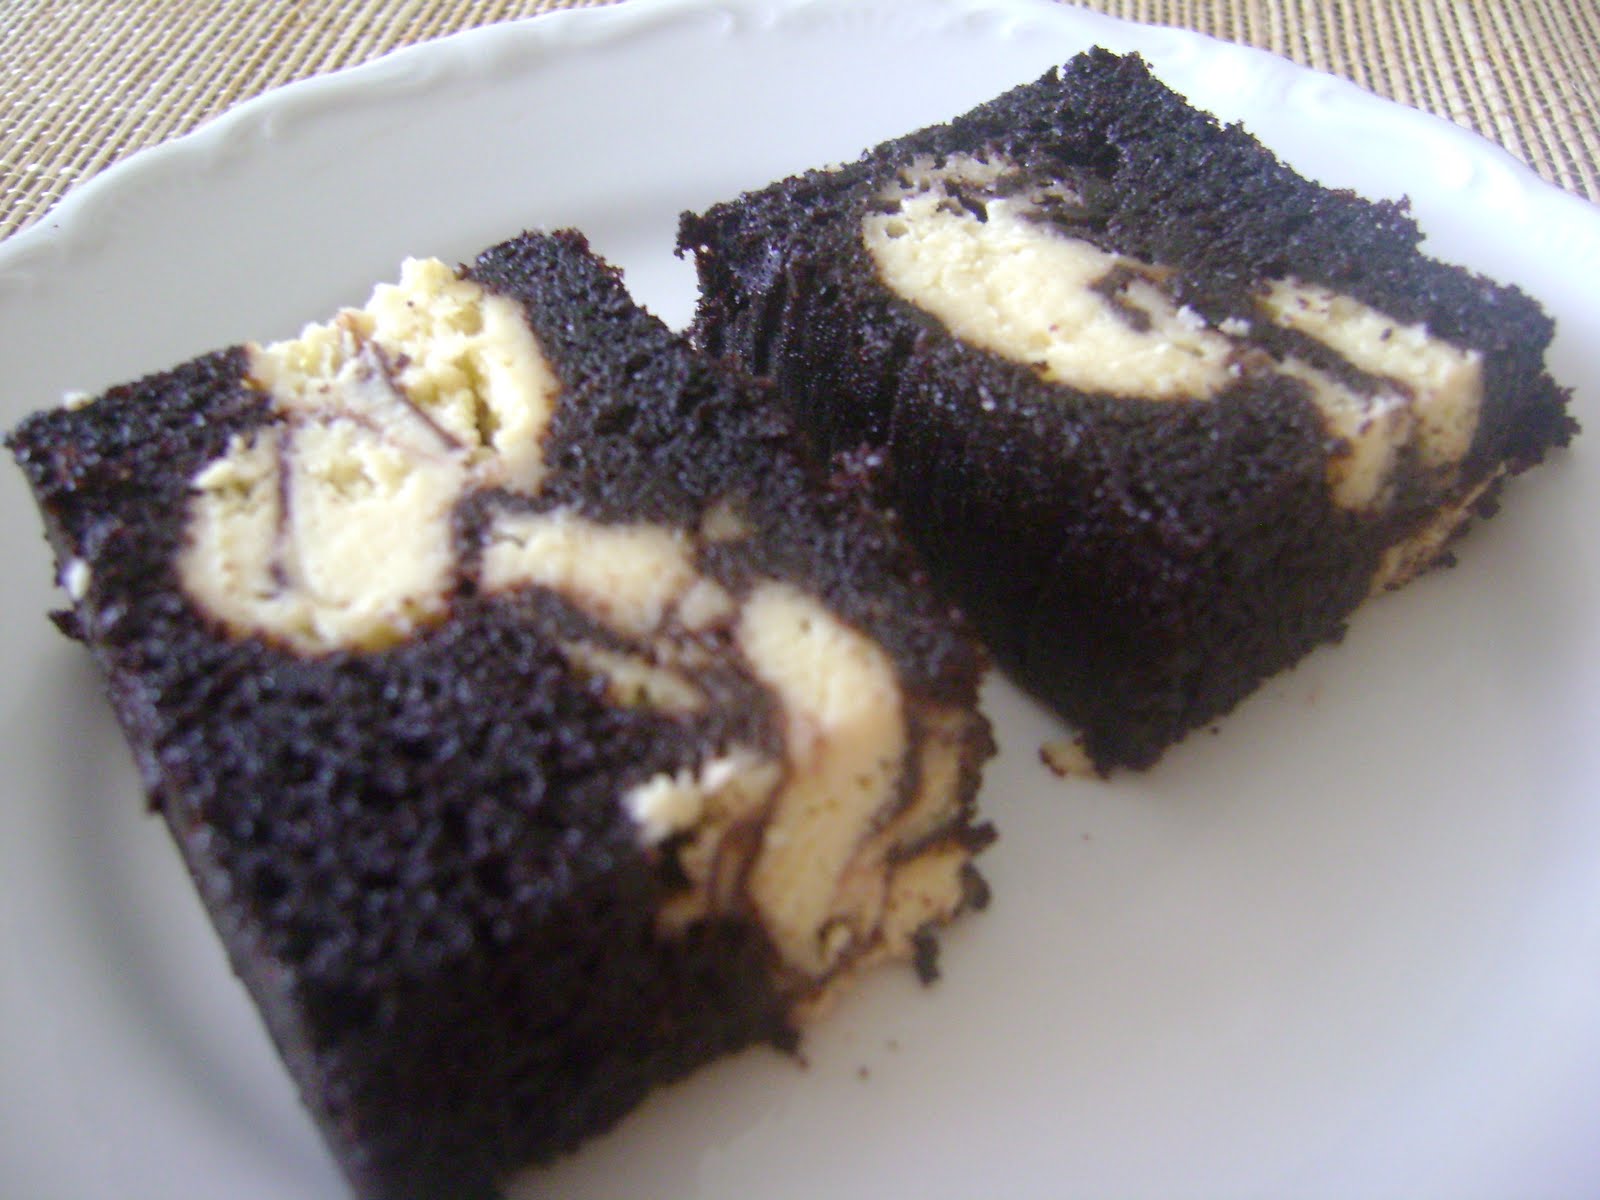 CORETAN DARI DAPUR: Marble Chocolate Cheese Cake